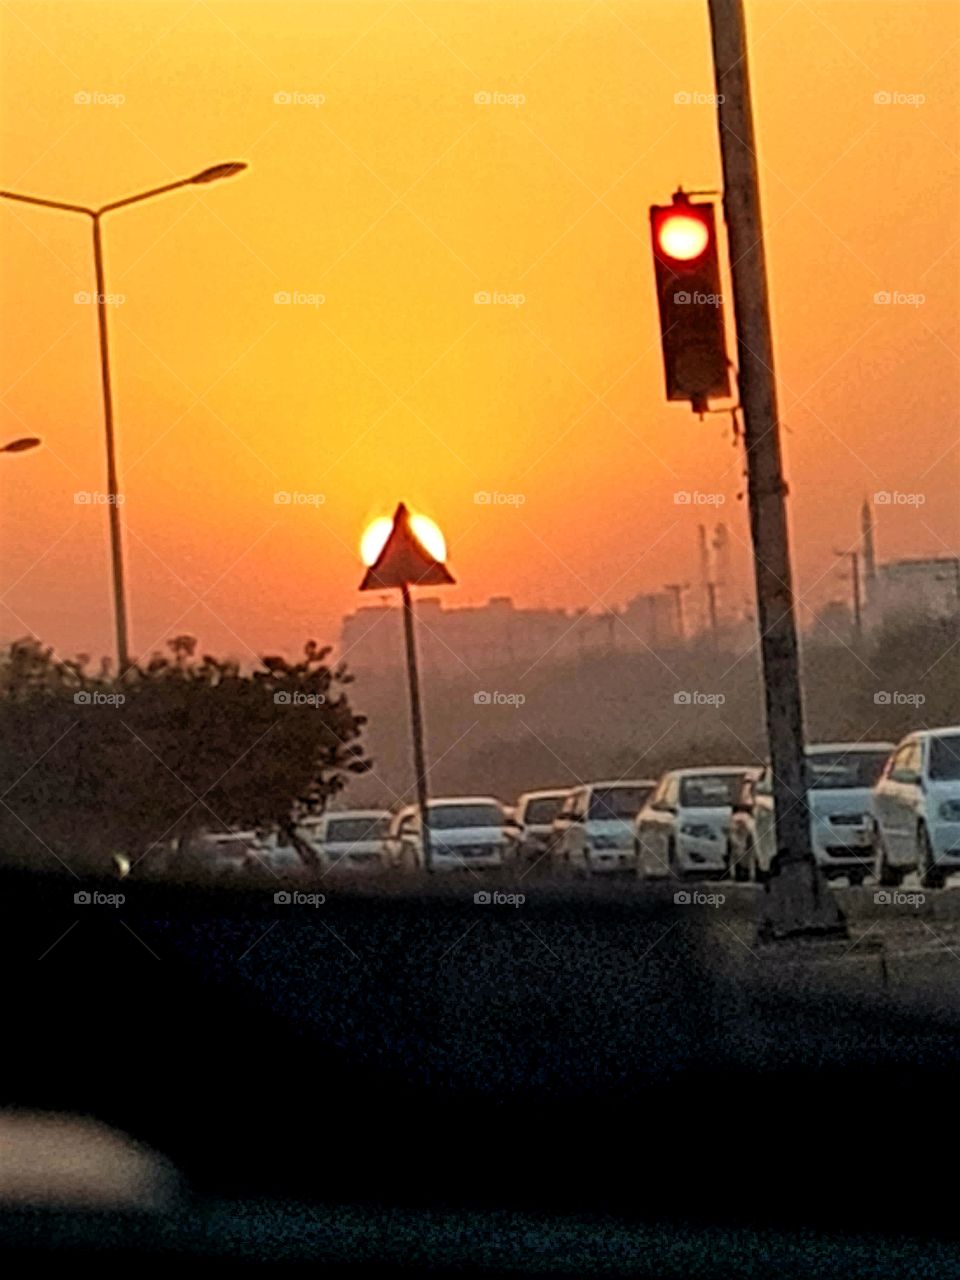 Sunset captured at Signal.